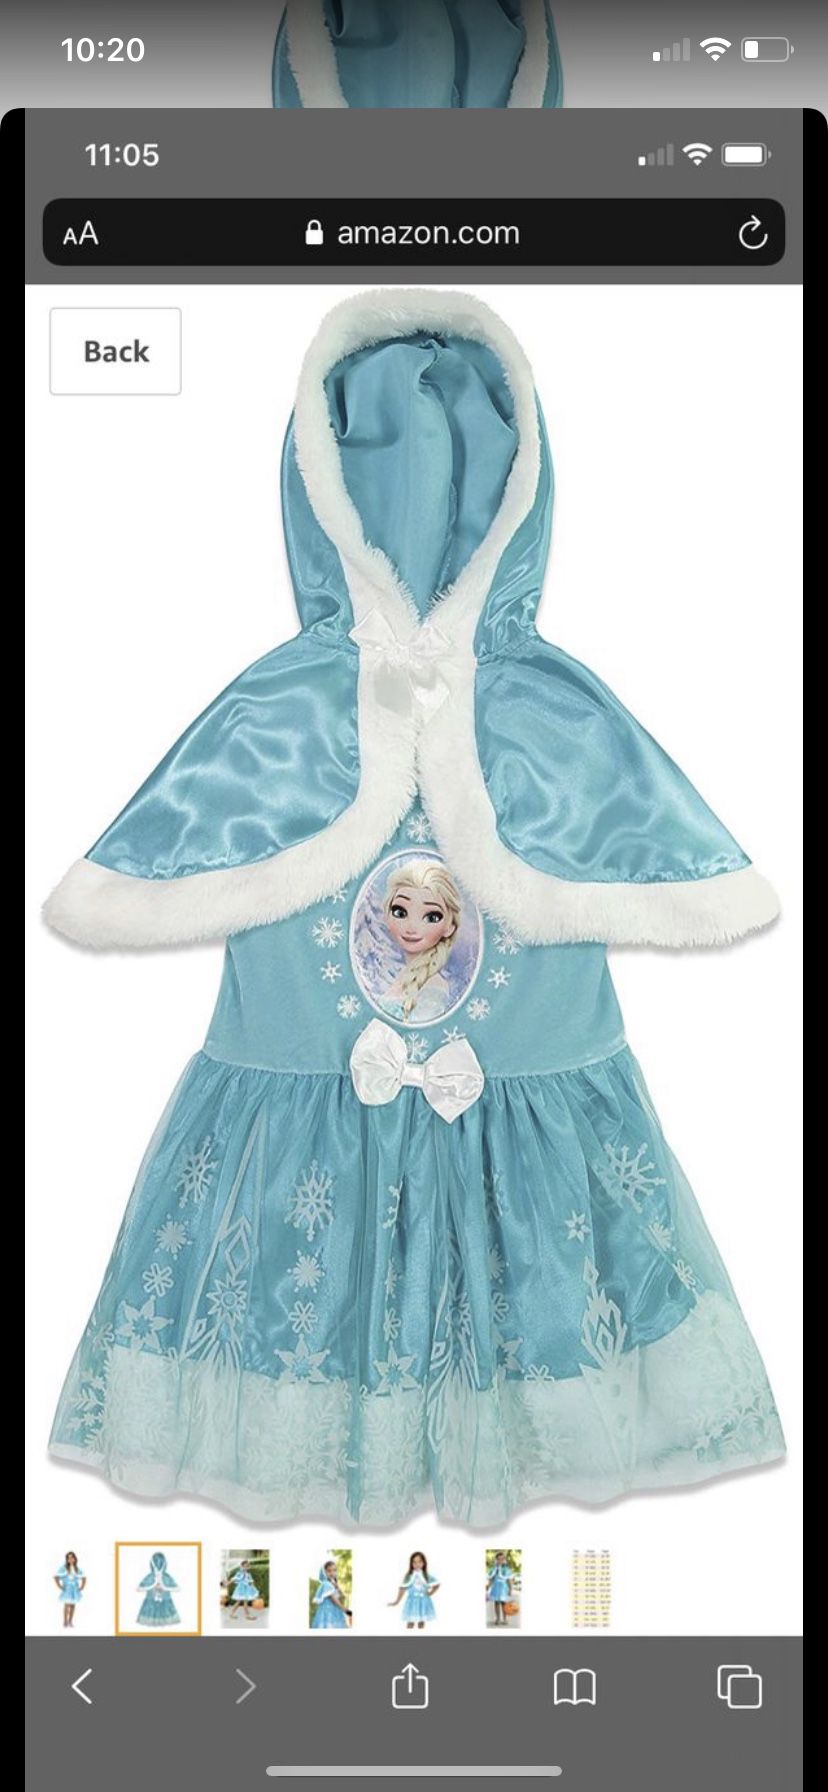 Disney Elsa dress with hooded cape